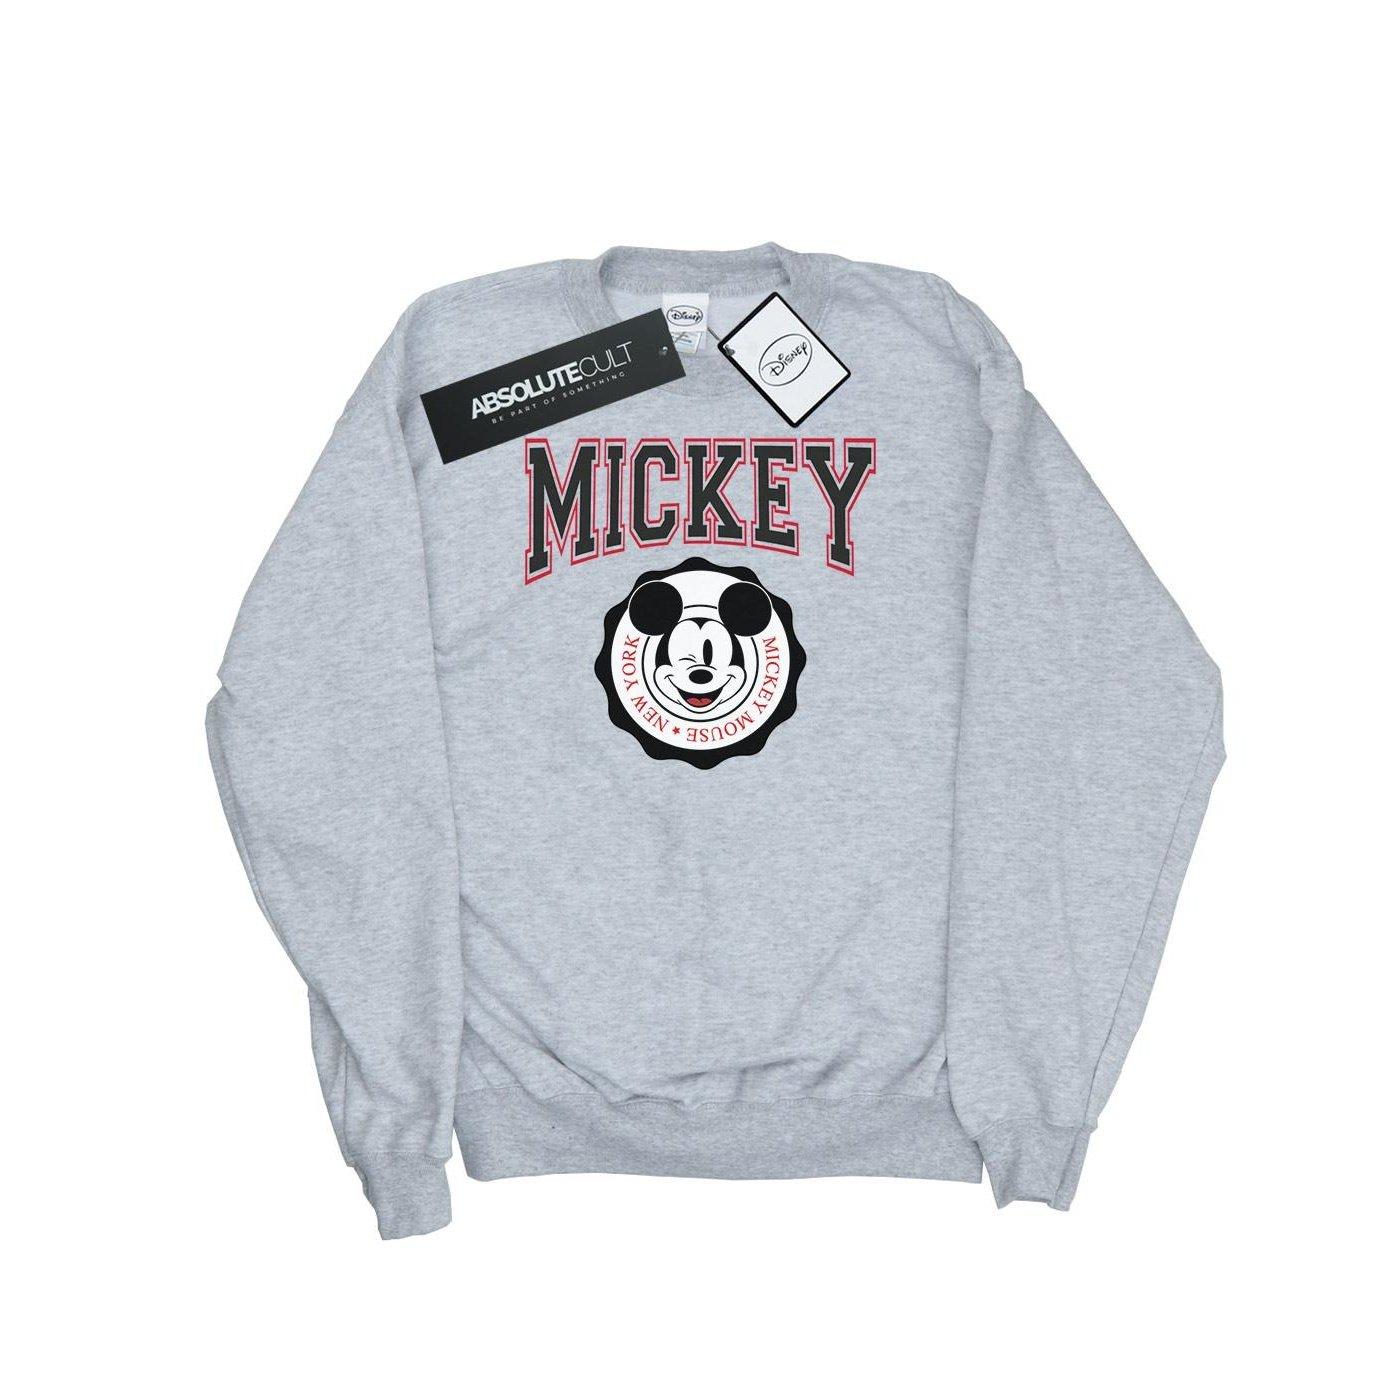 Mickey Mouse New York Seal Sweatshirt Unisex Grau 128